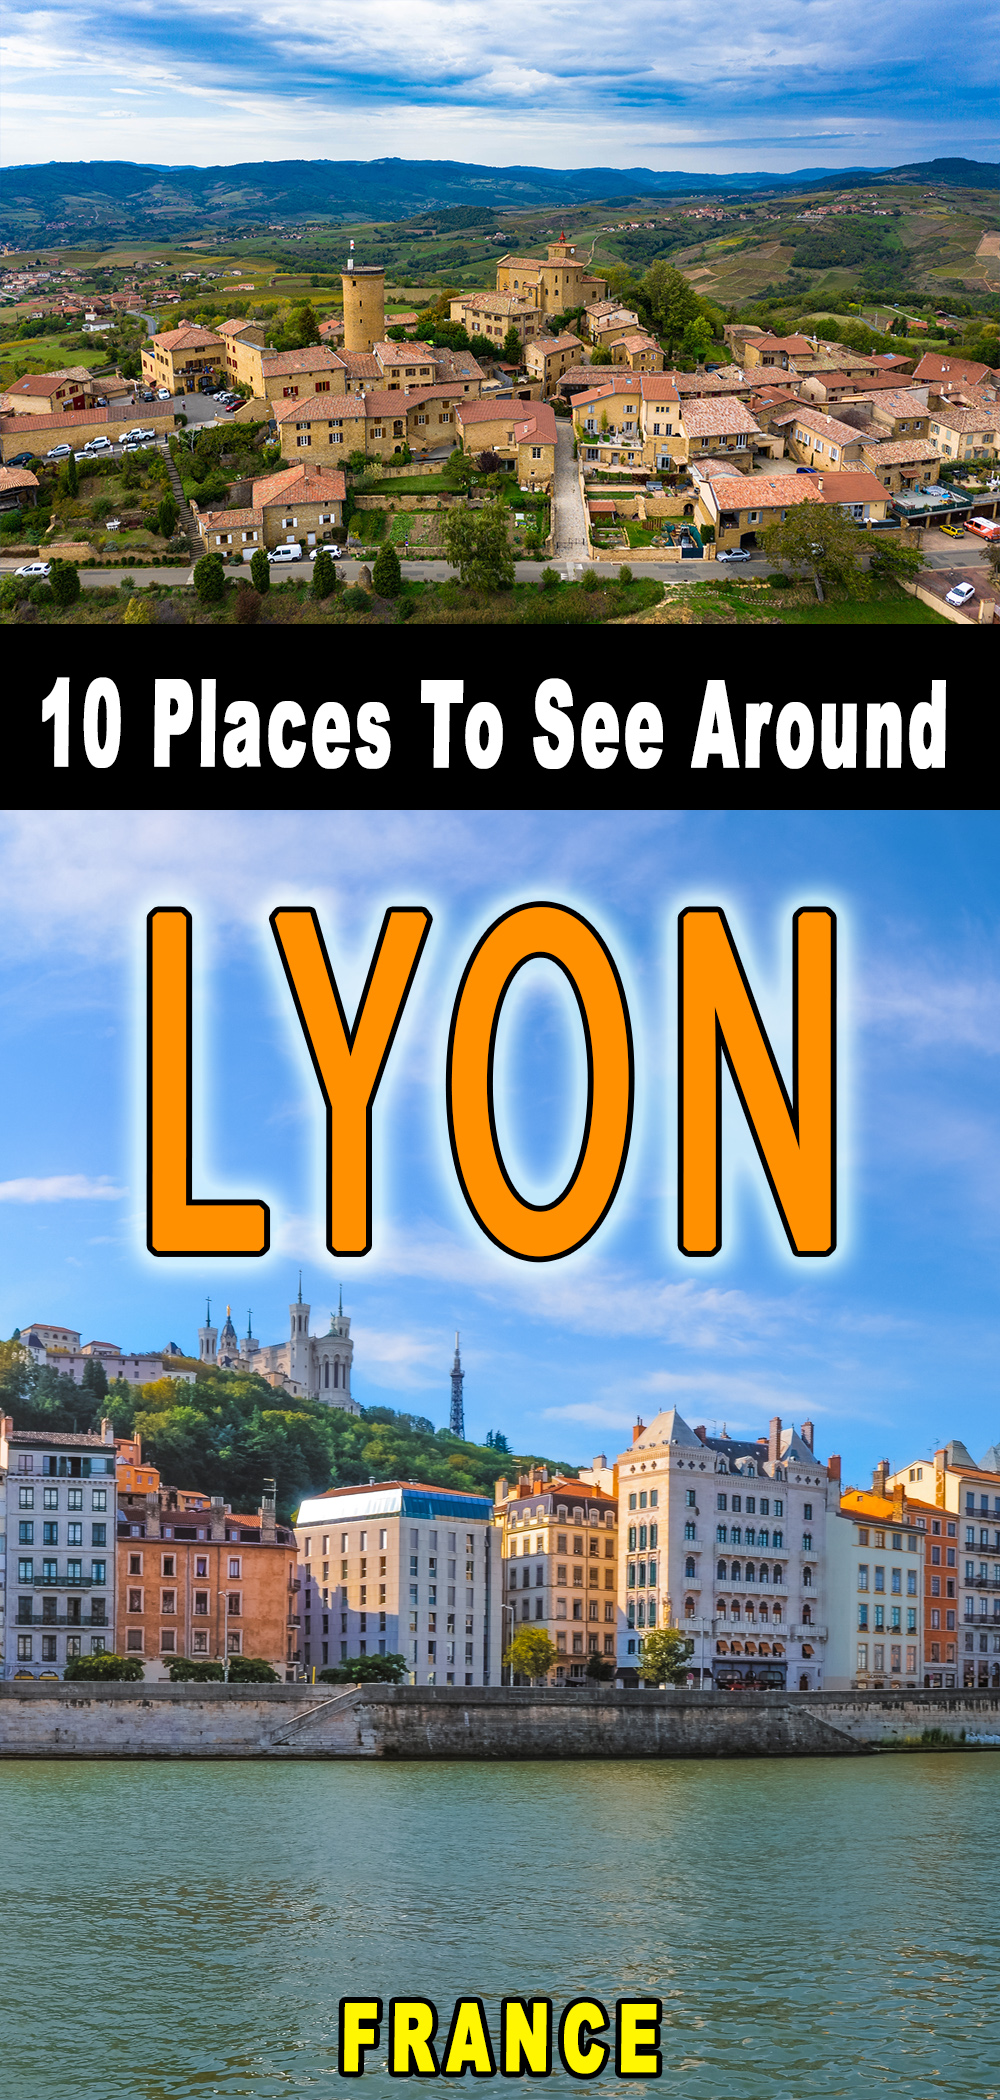 Around Lyon - Pinterest